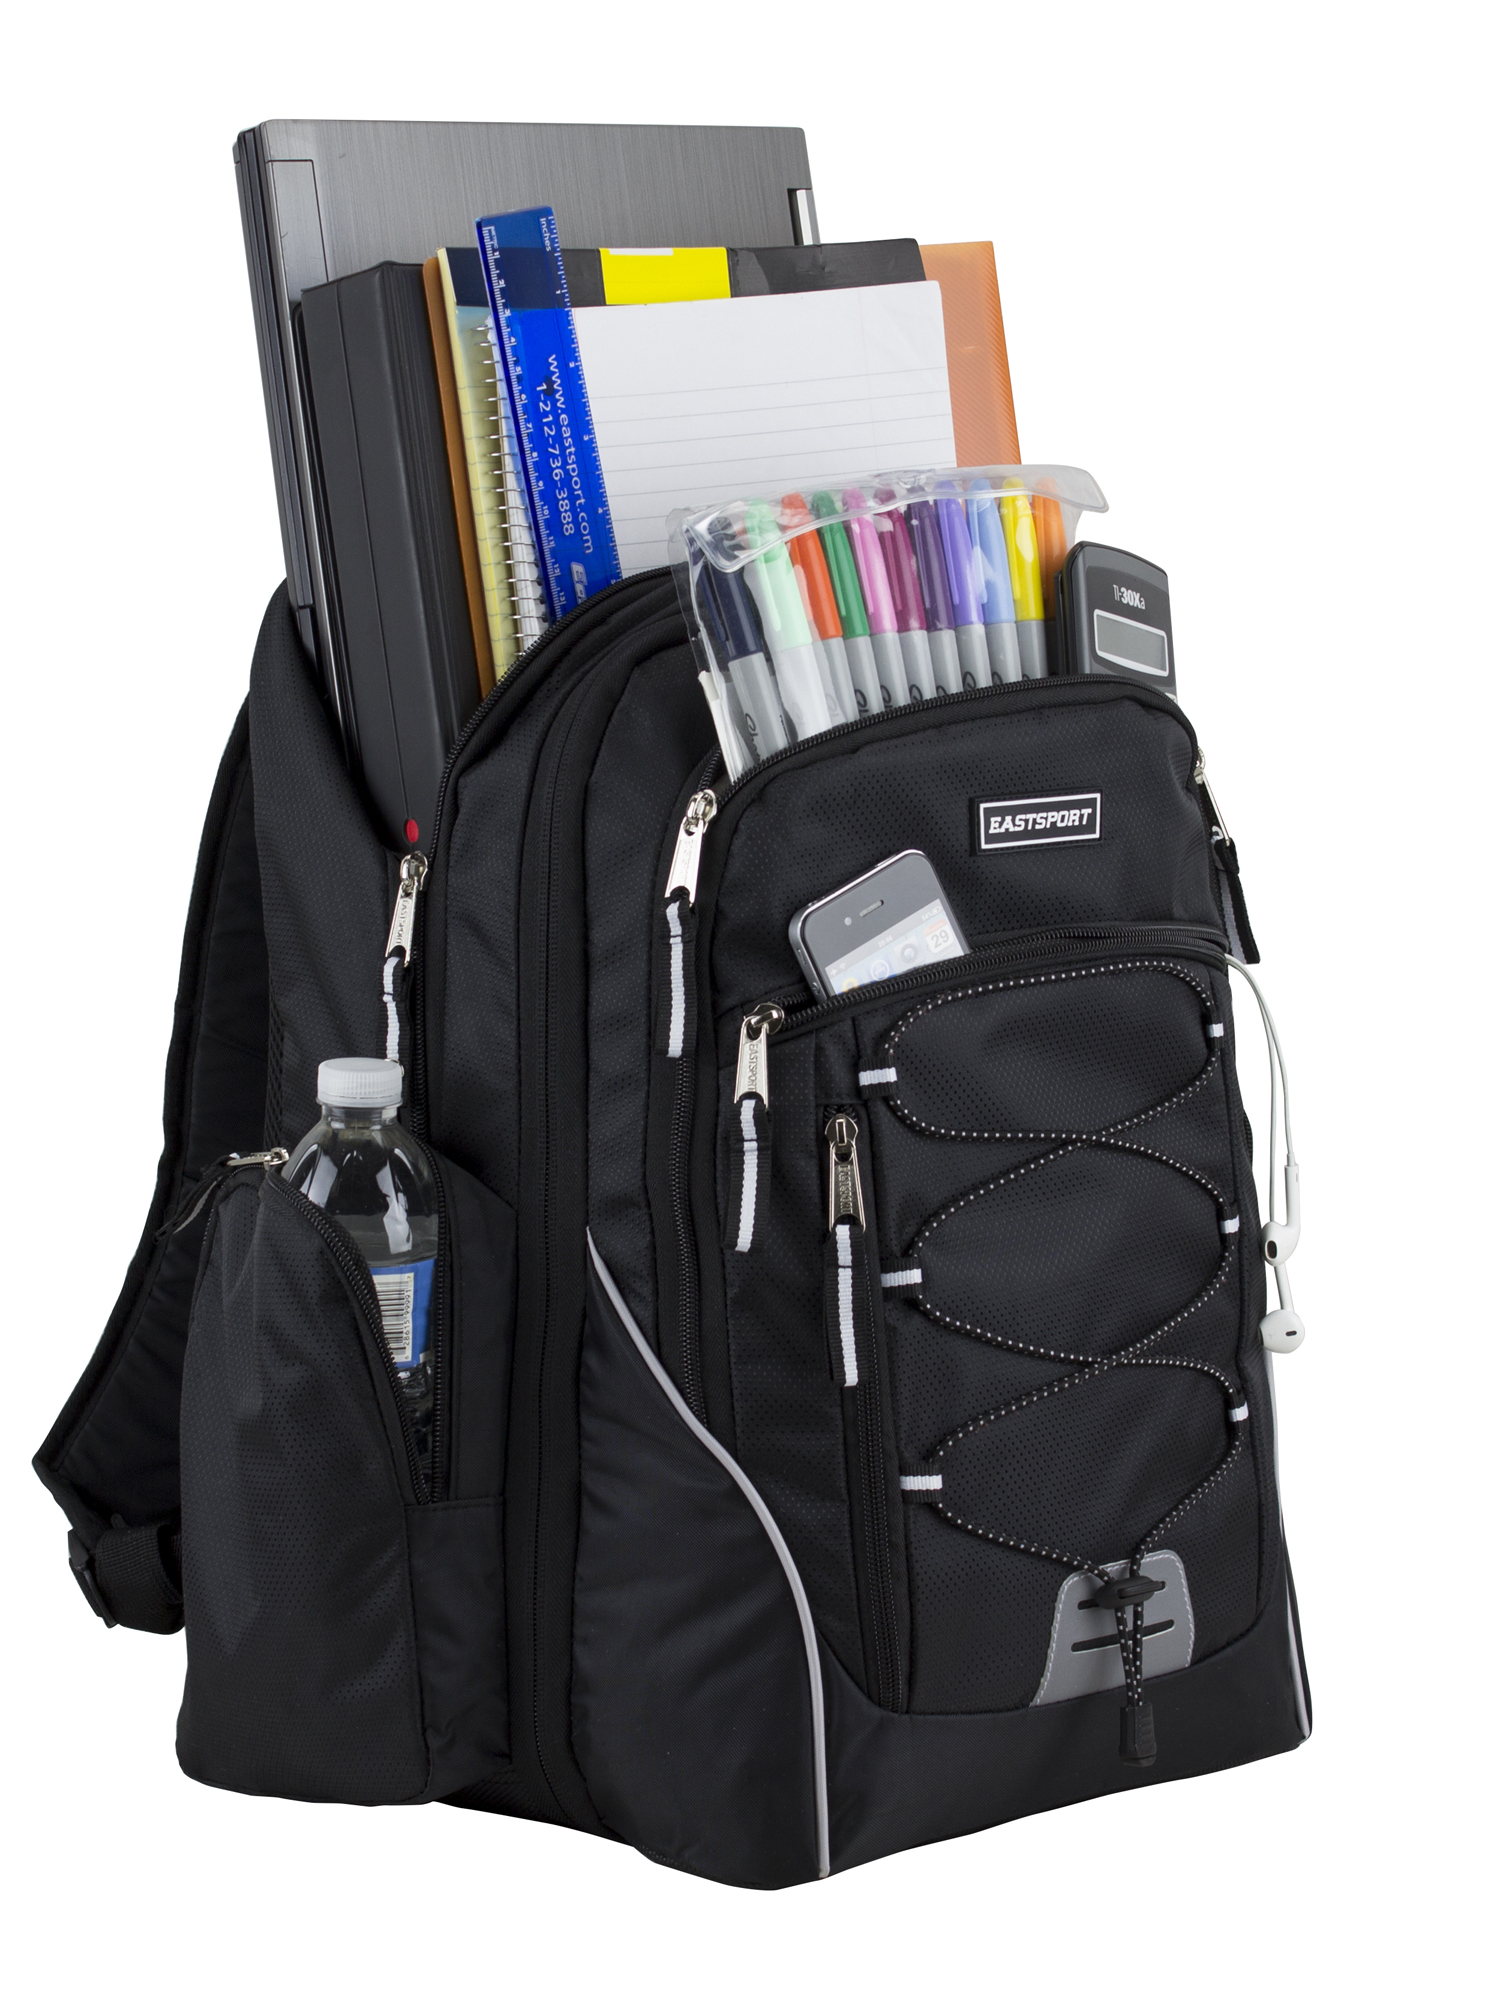 Eastsport Optimus Backpack, Black - image 5 of 7